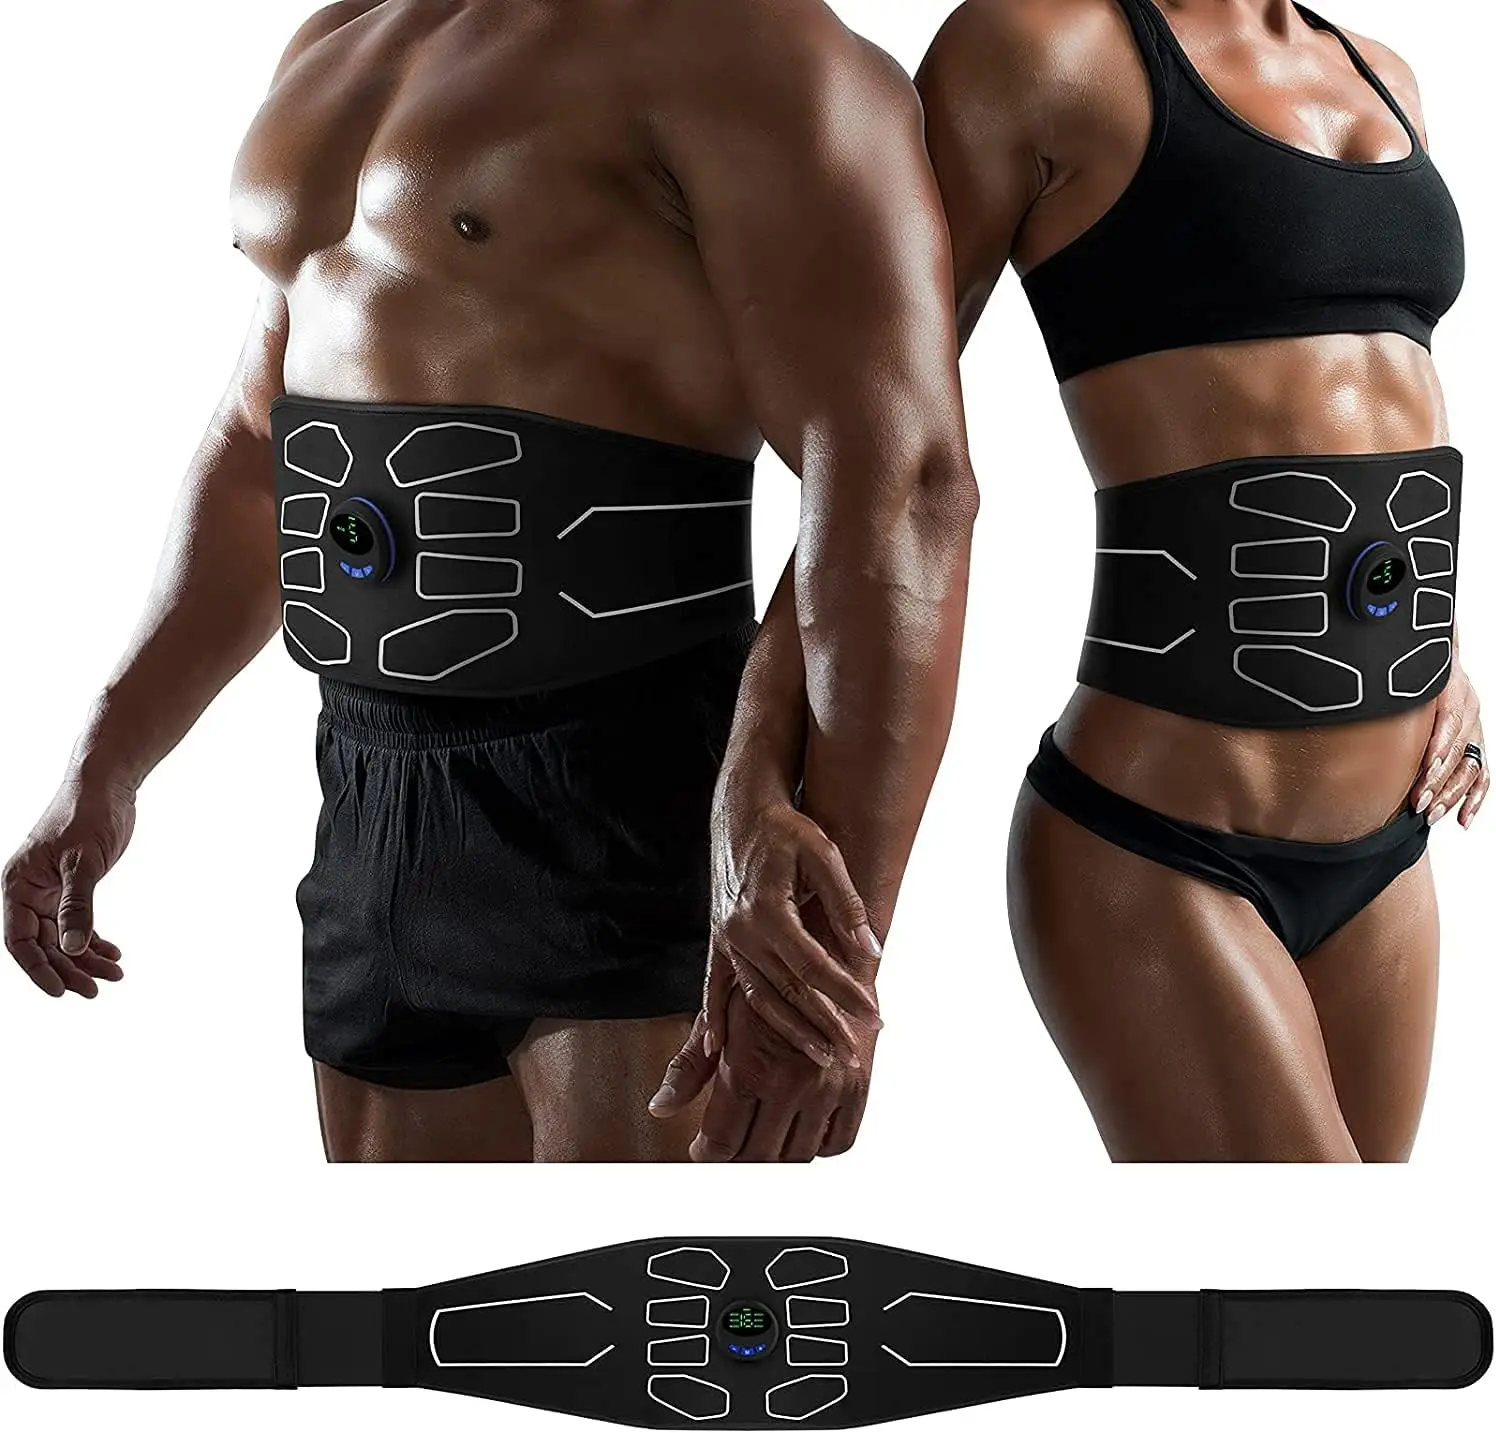 

Stimulator, Ab Machine, Abdominal Toning Belt Muscle Toner Fitness Training Gear Ab Trainer Equipment for Home MZ-4 Gym sets Gym